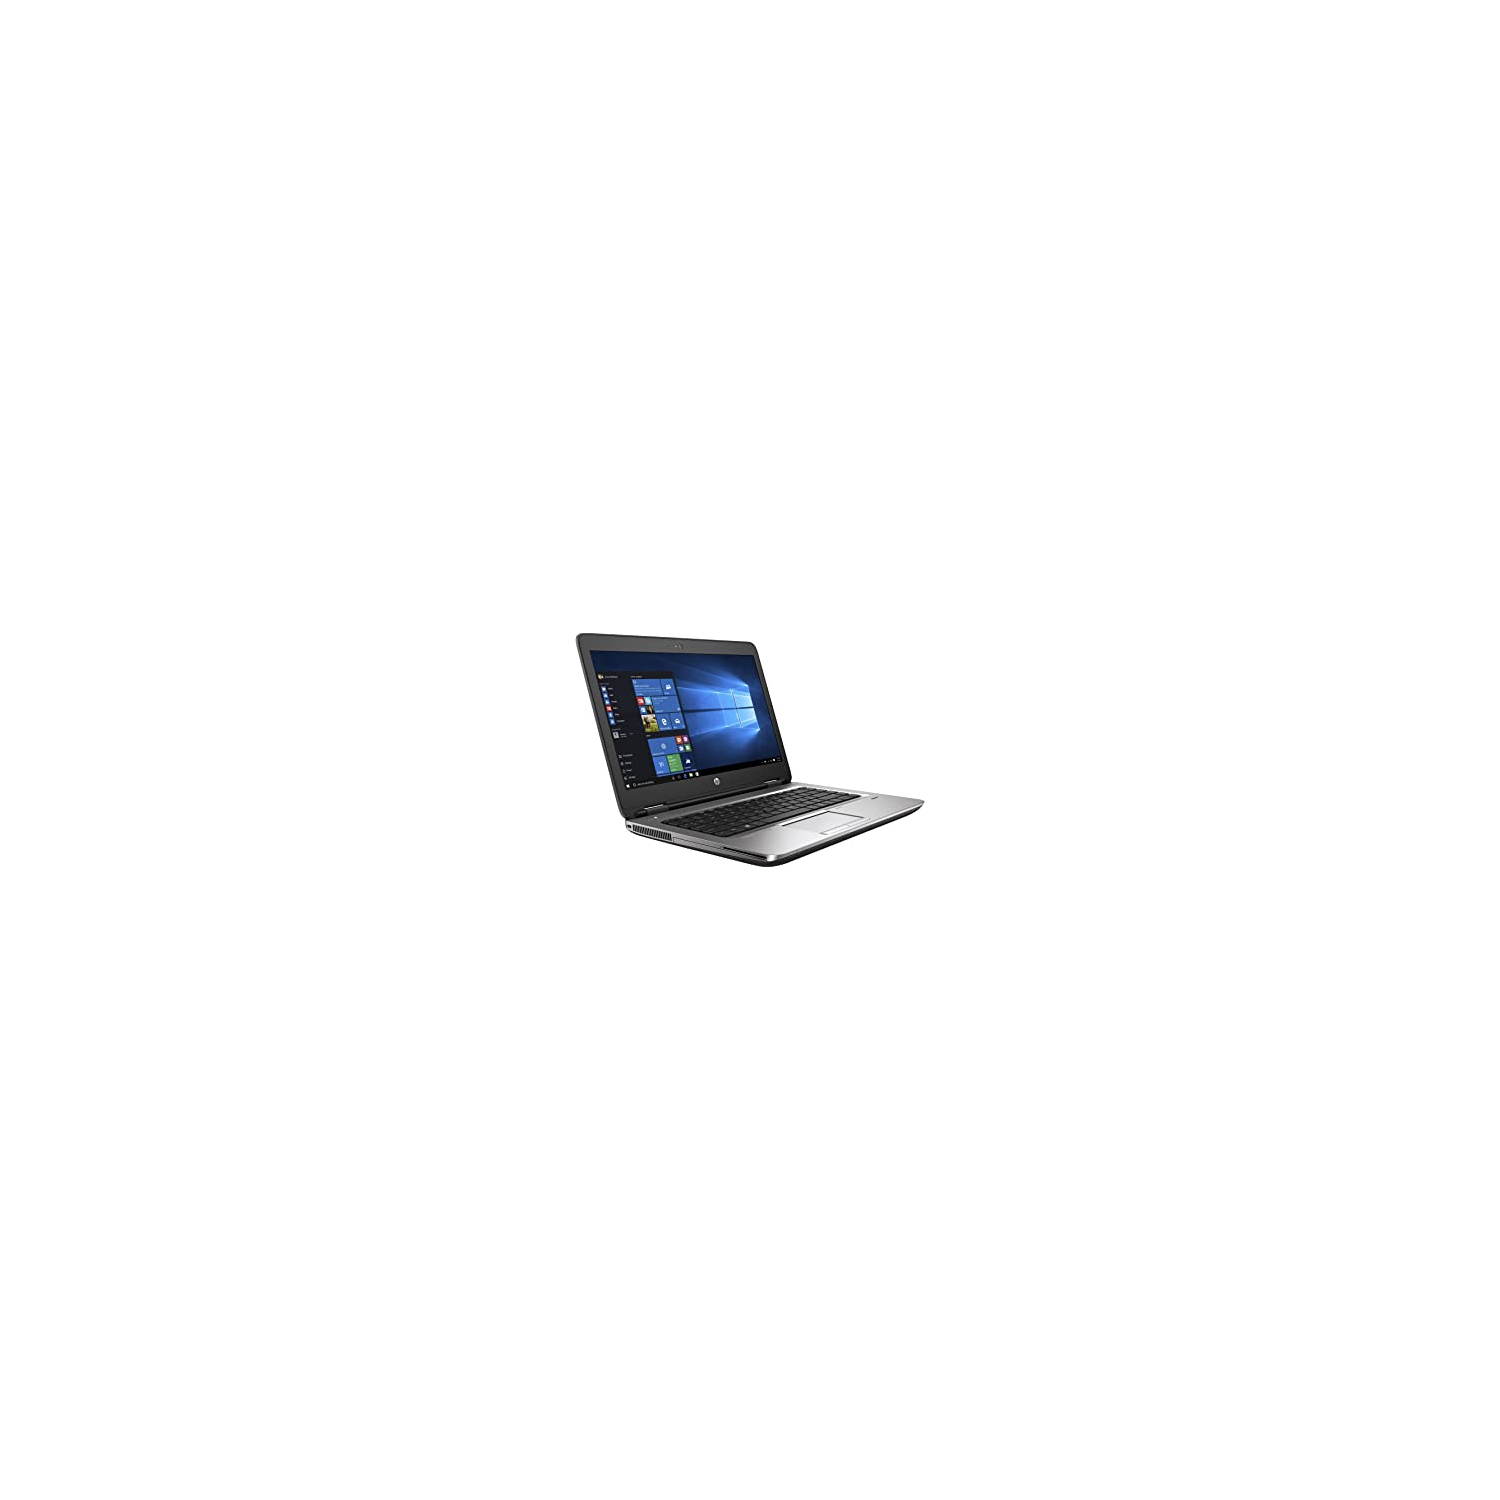 Refurbished (Good) - HP ProBook 640 G2 14" Laptop, Intel Core i5 6300U 2.4 GHZ, 8GB RAM, 240GB SSD, WiFi, DVD/RW, WEBCAM WIN 10 HOME